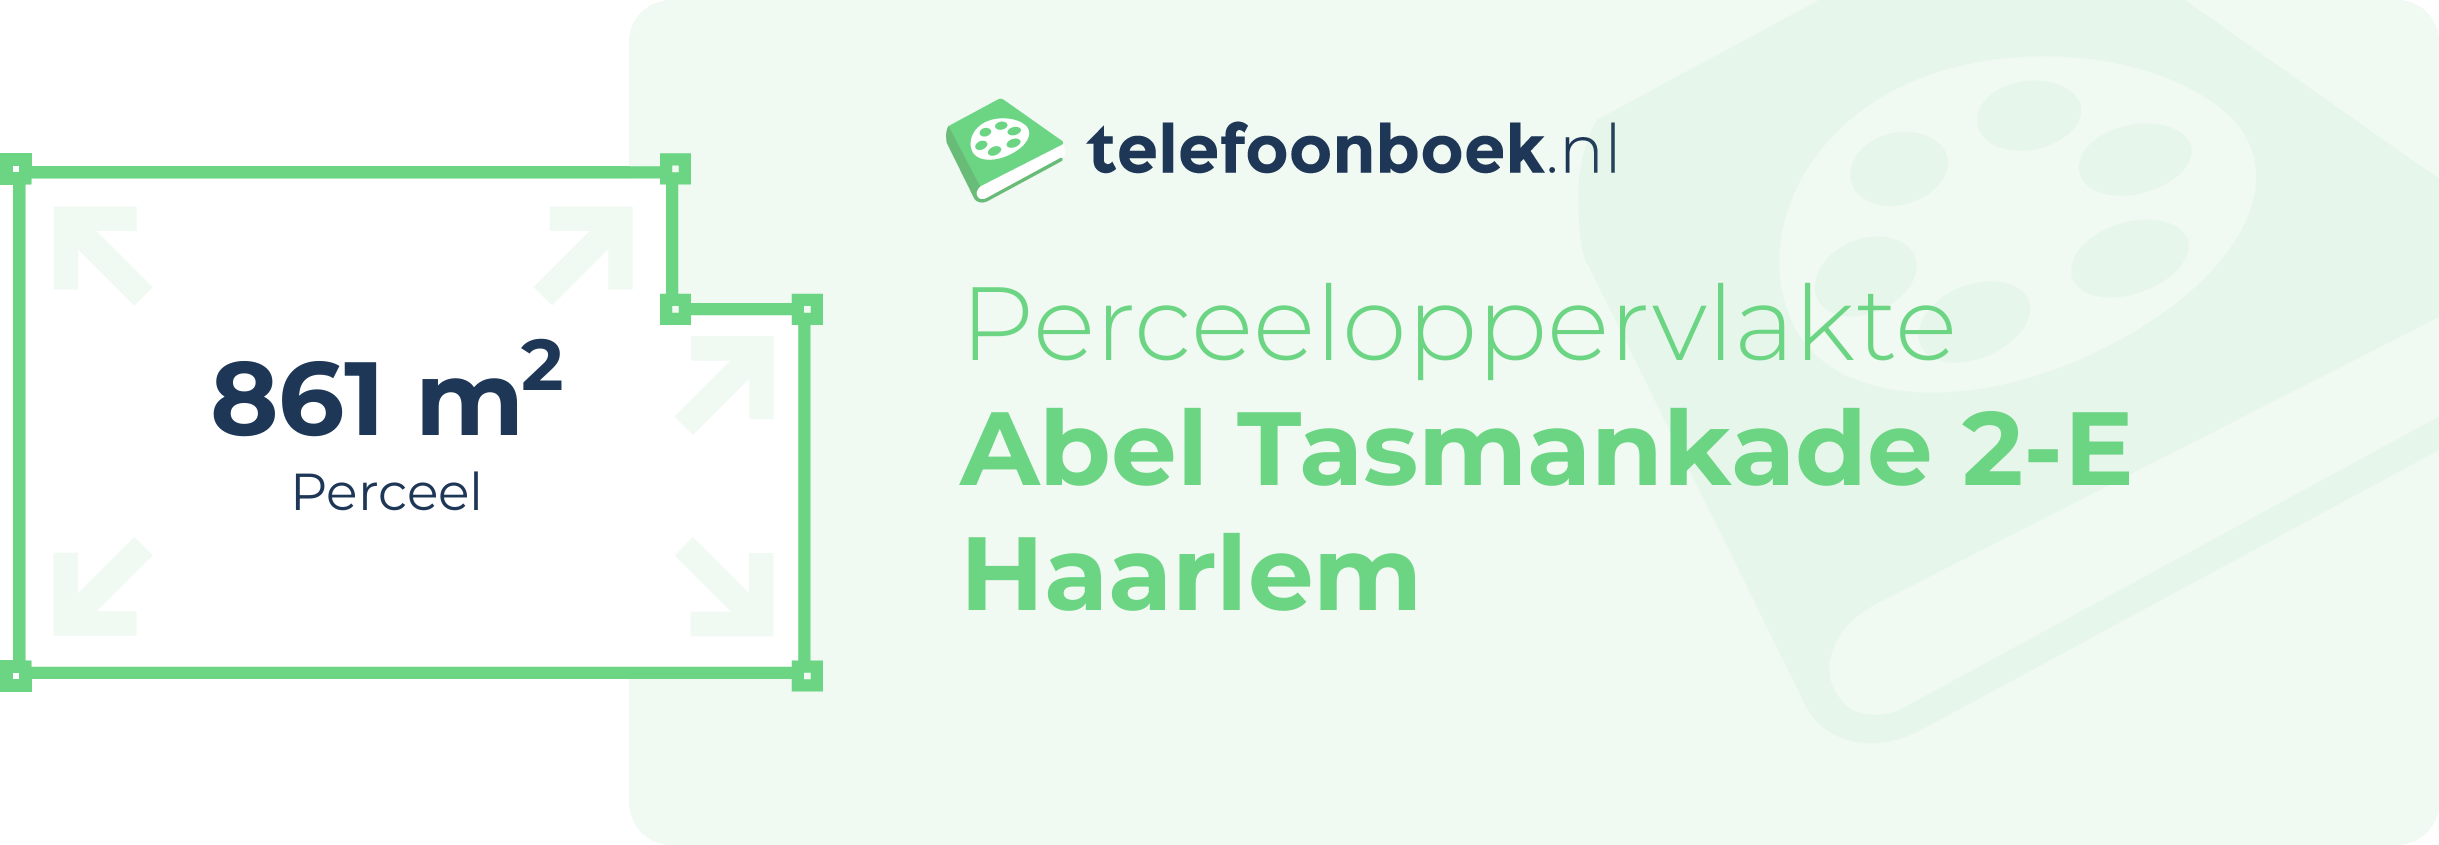 Perceeloppervlakte Abel Tasmankade 2-E Haarlem